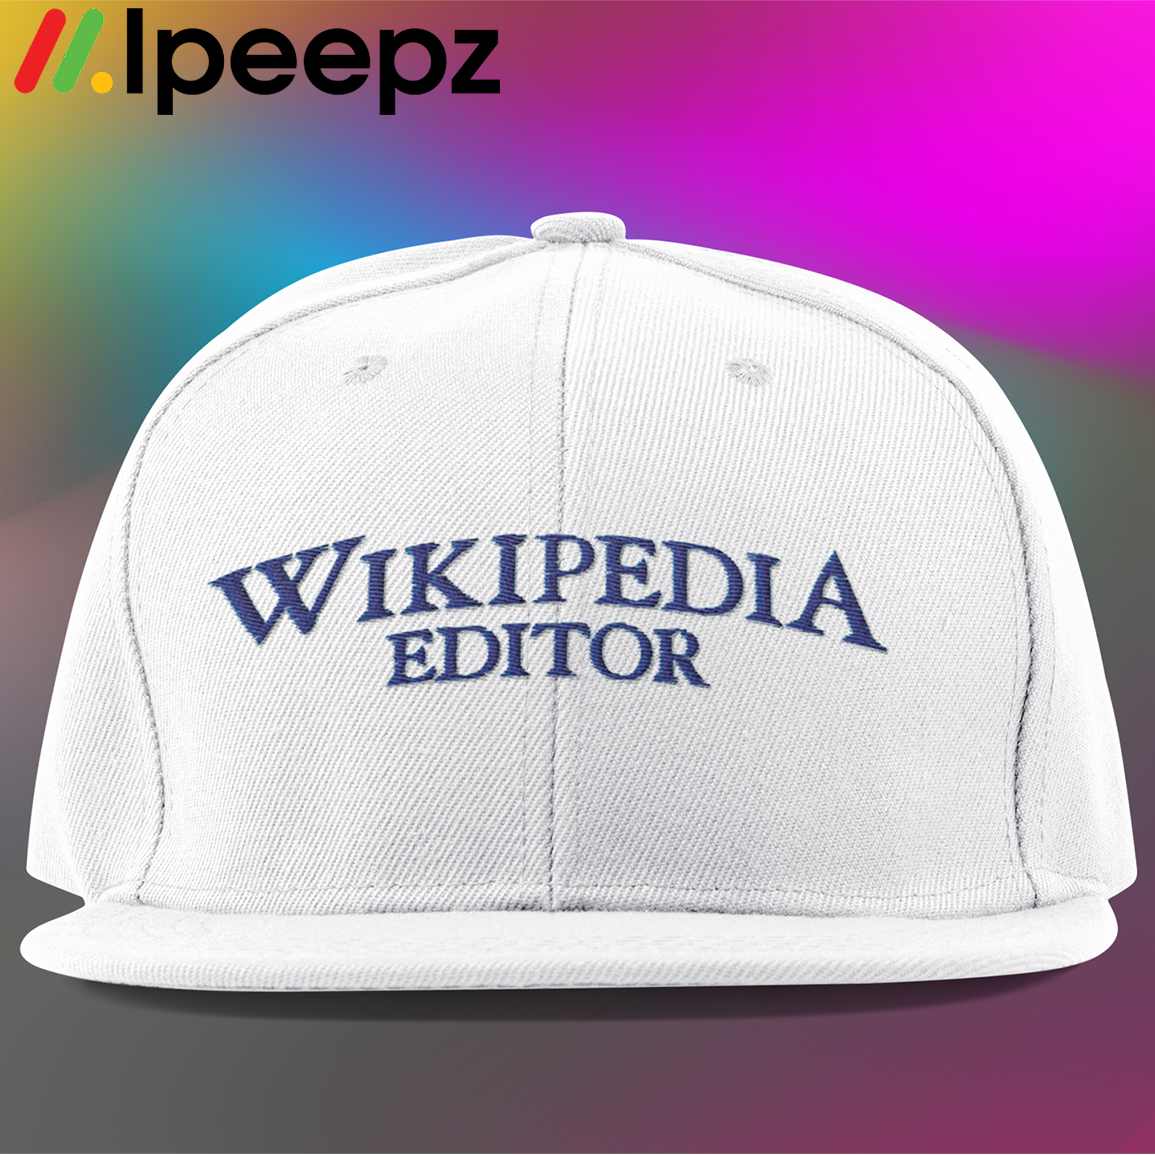 Baseball cap - Wikipedia